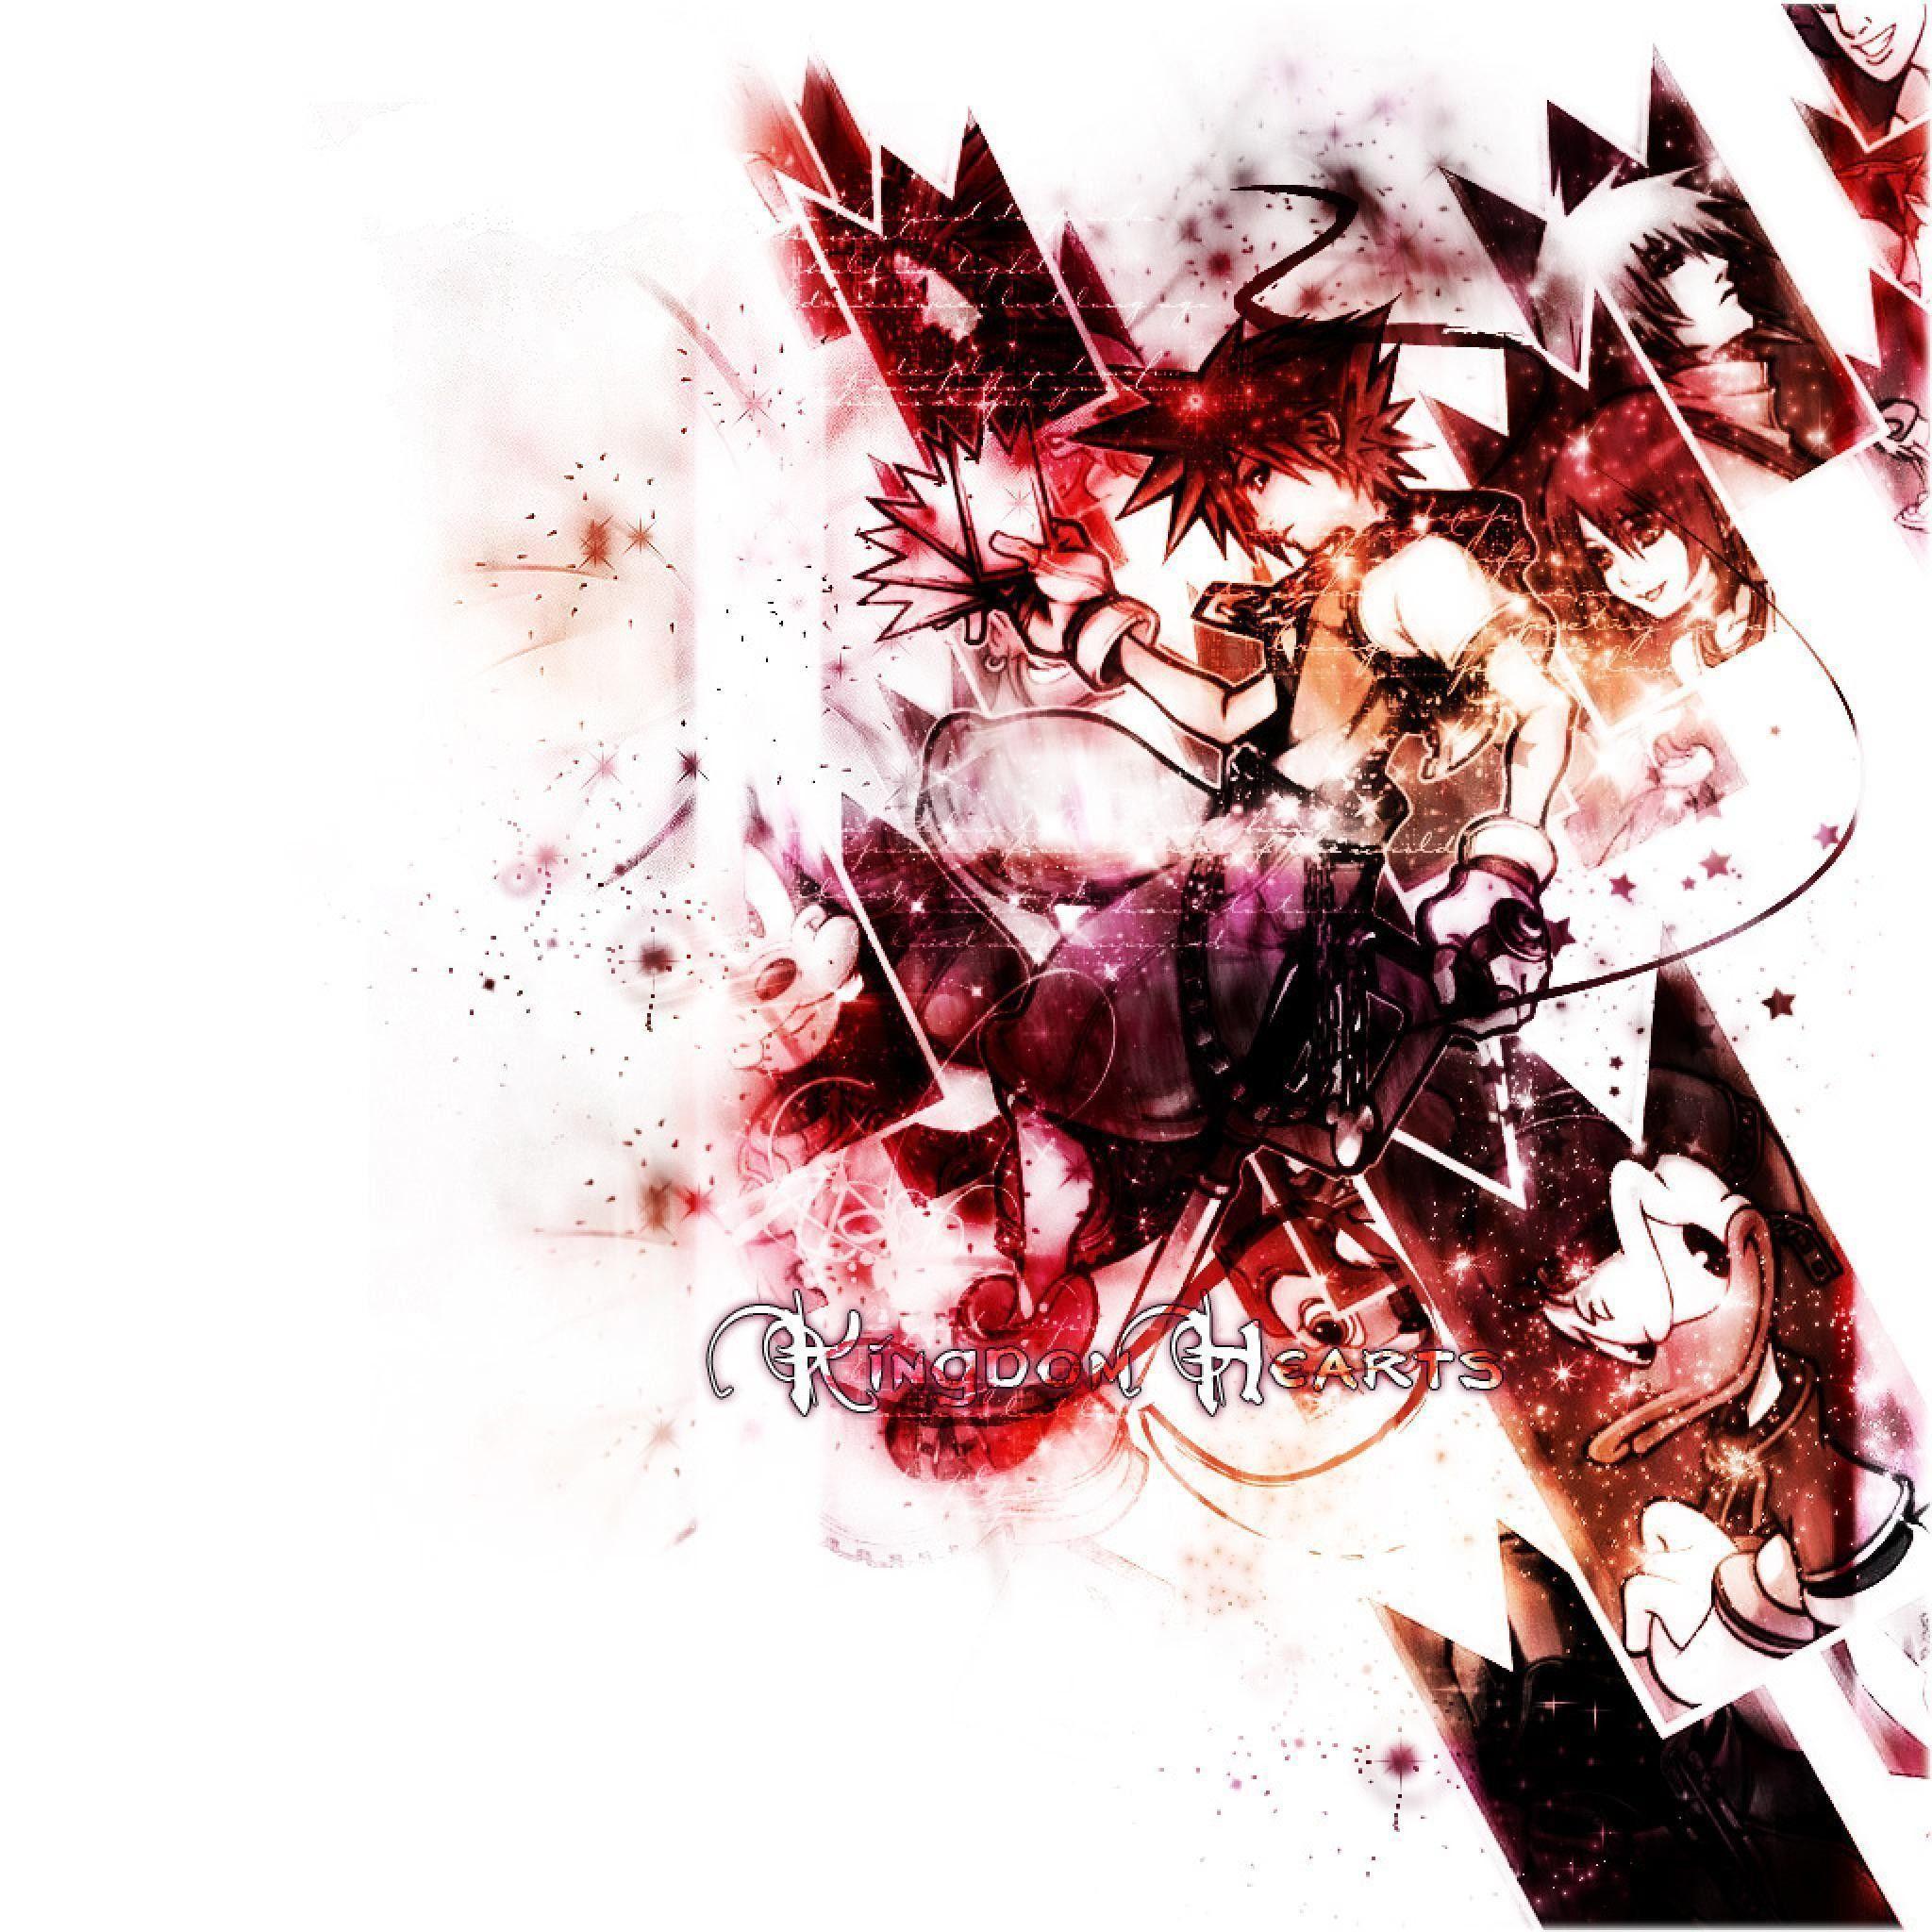 Axel Kingdom Hearts Wallpaper